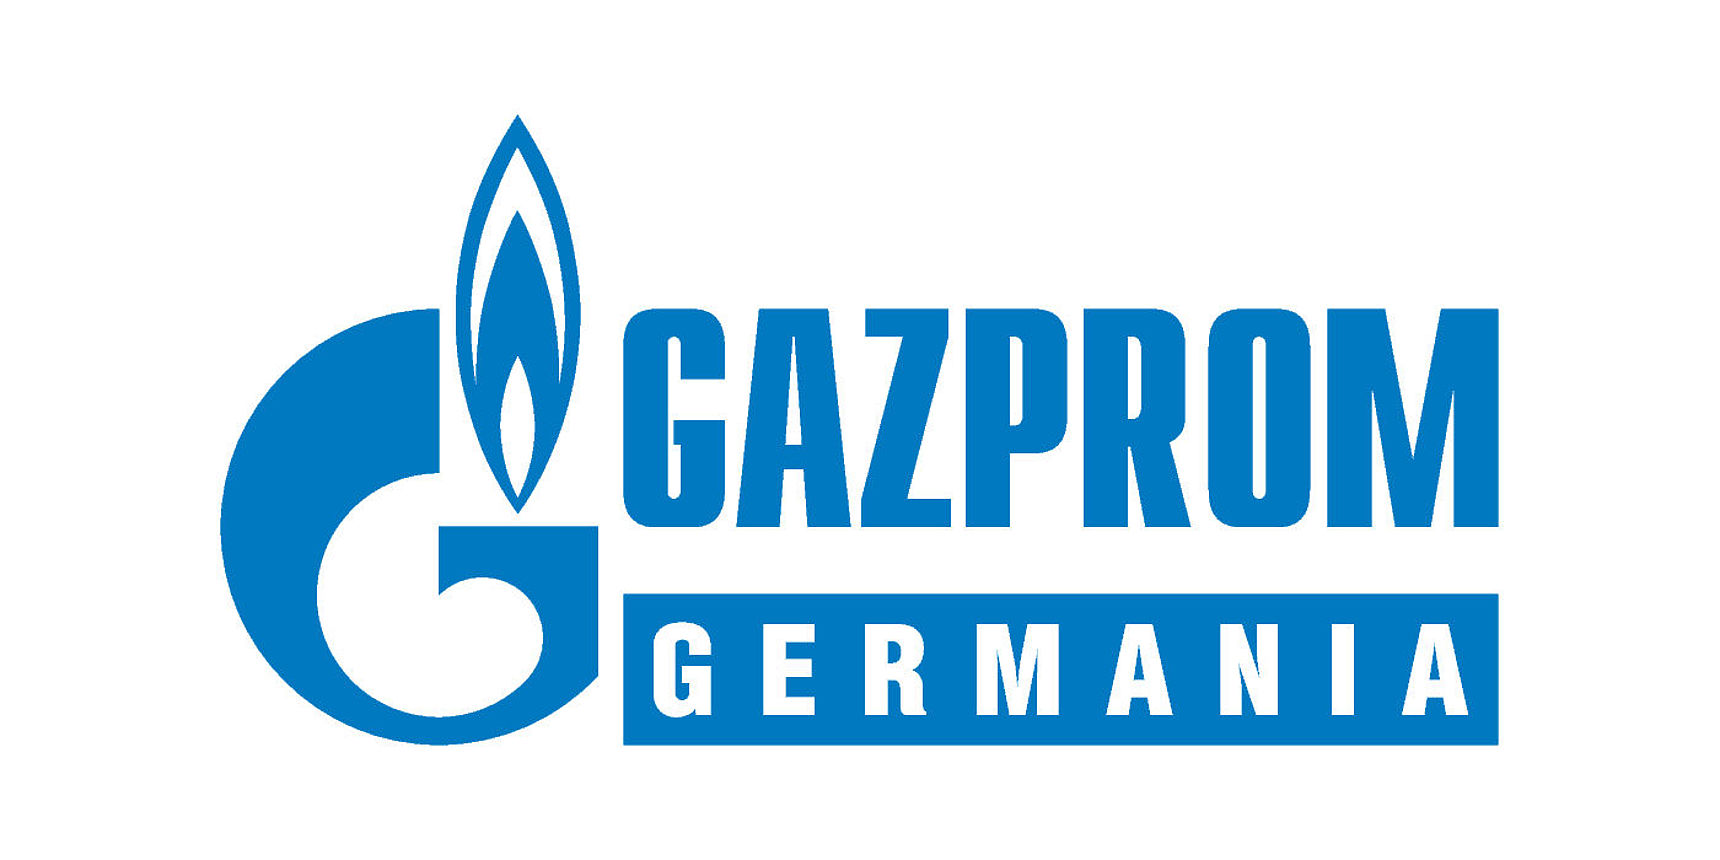 [Translate to English:] Gazprom Logo Deutschland Tour